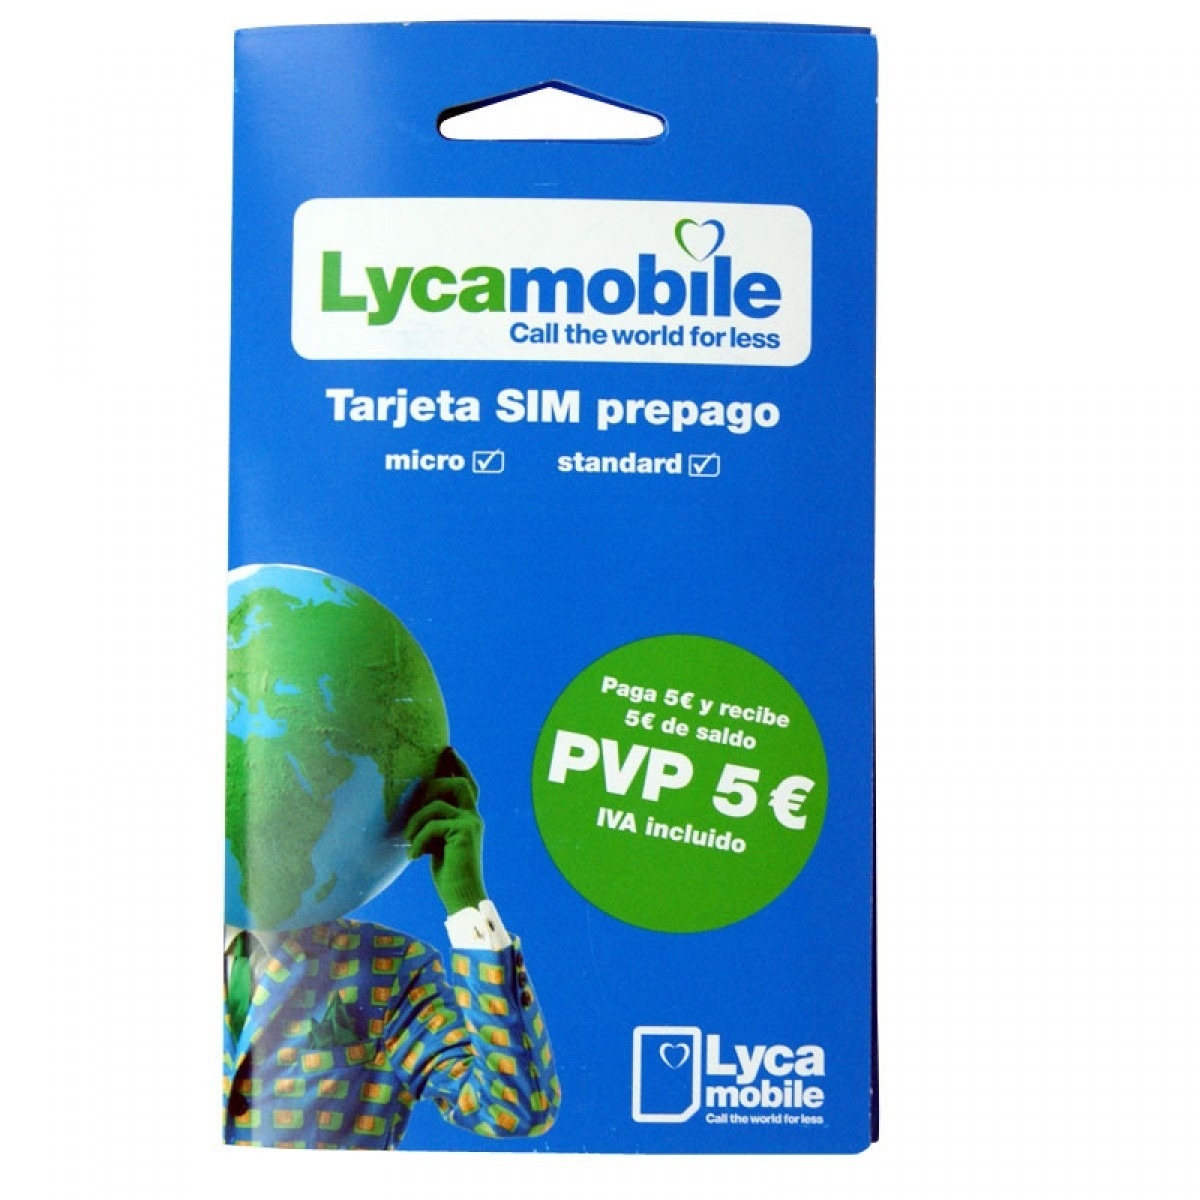 Lycamobile SIM card in Spain